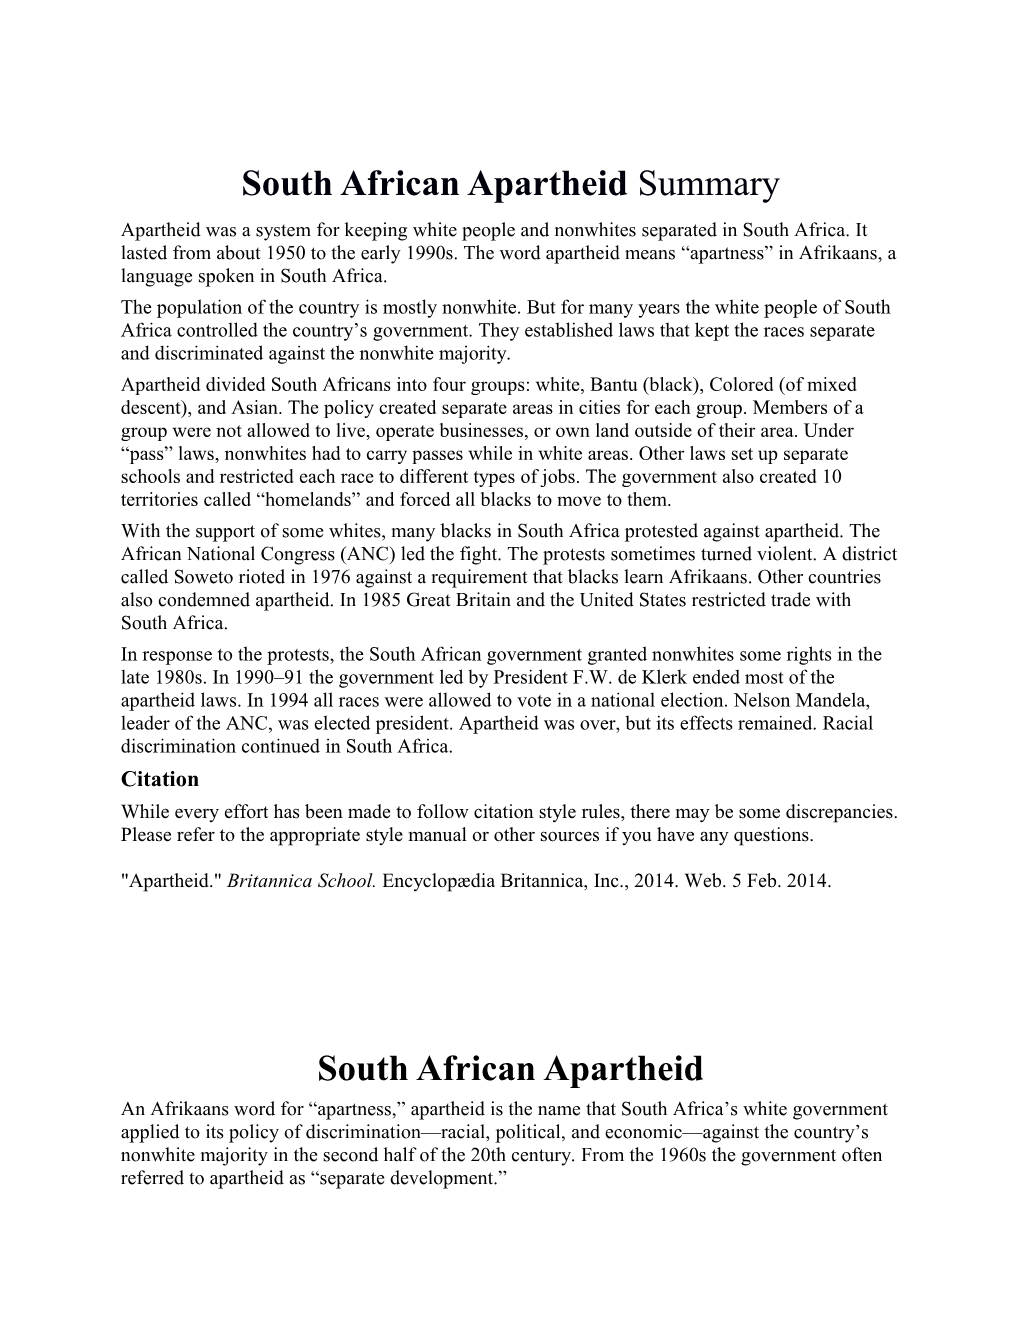 South African Apartheidsummary